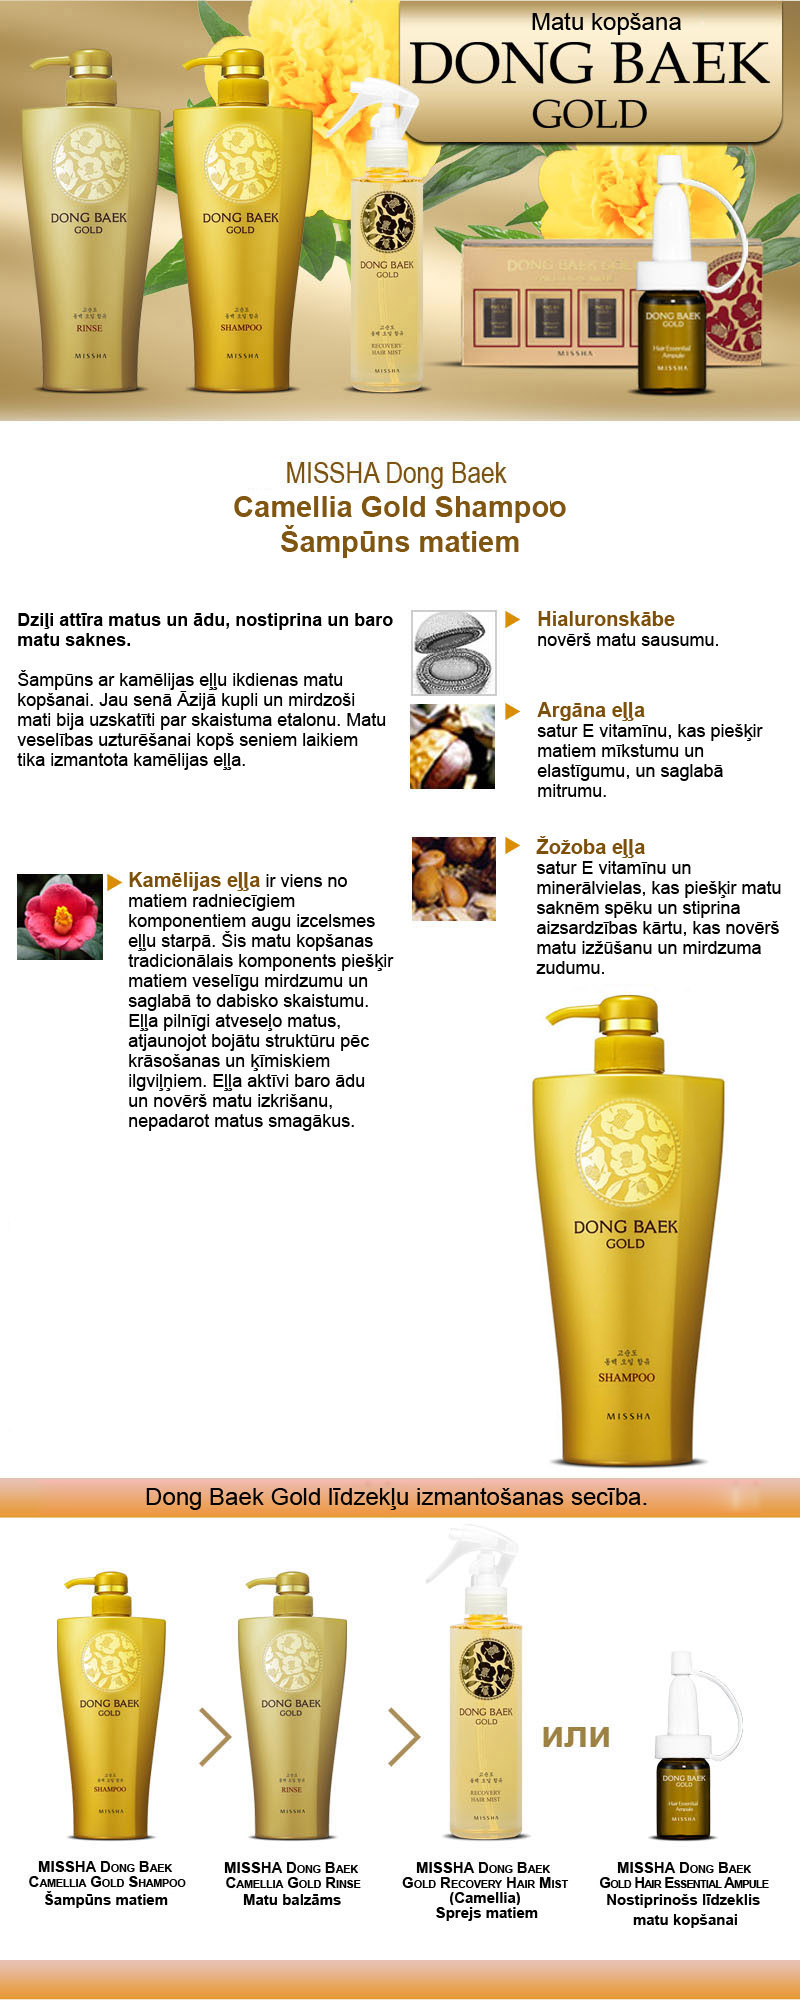 Premium DongBaek (Camellia) Gold Shampoo 